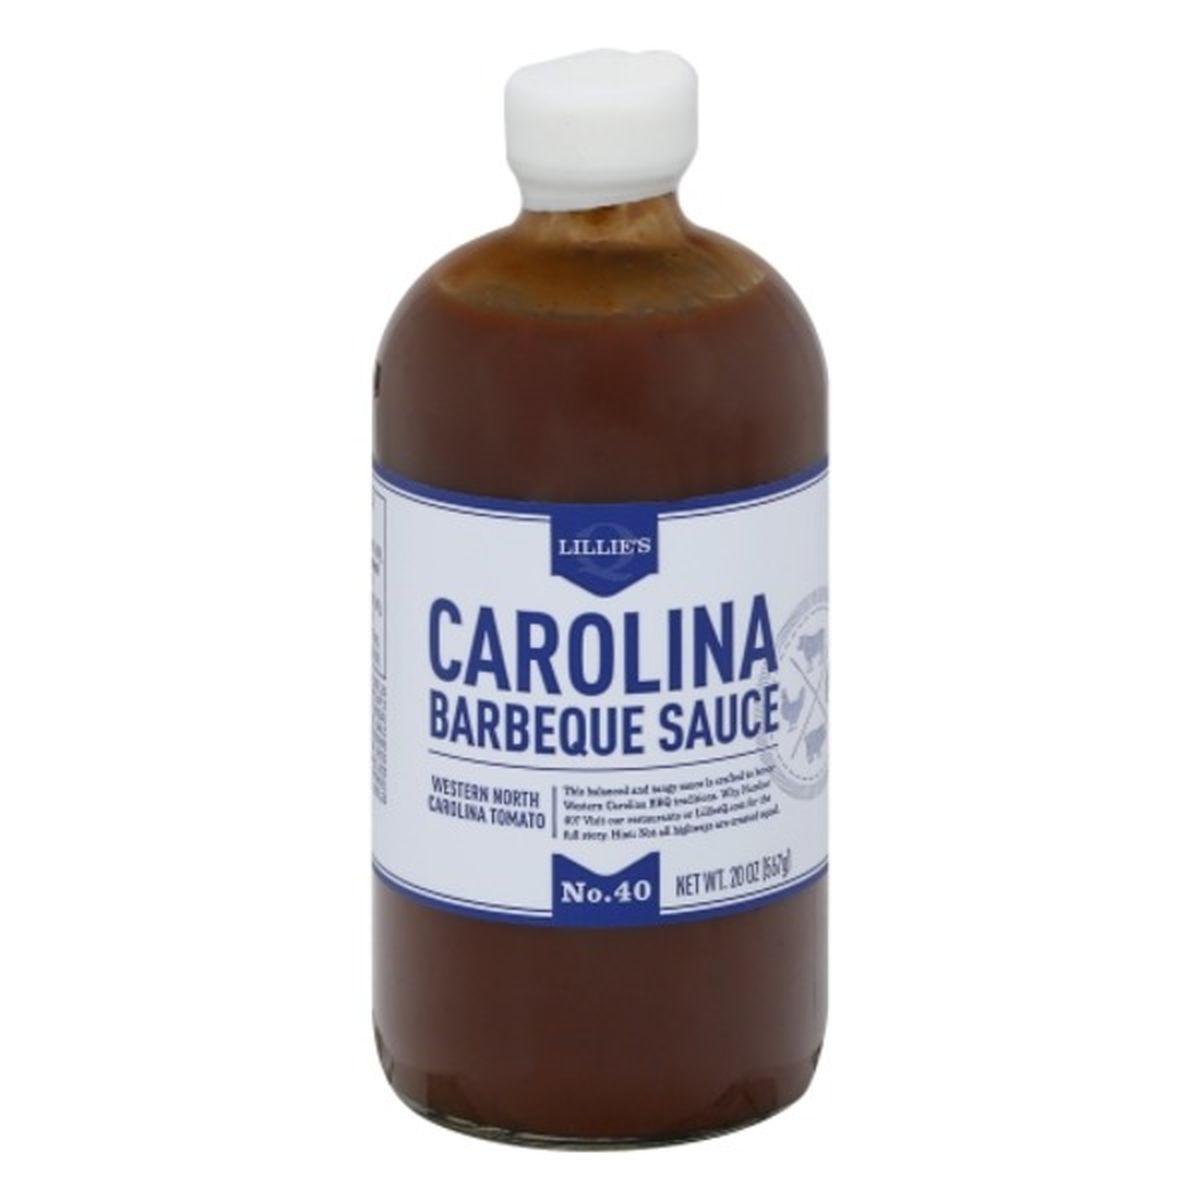 Calories in Lillie's Q Barbeque Sauce, Carolina, No. 40